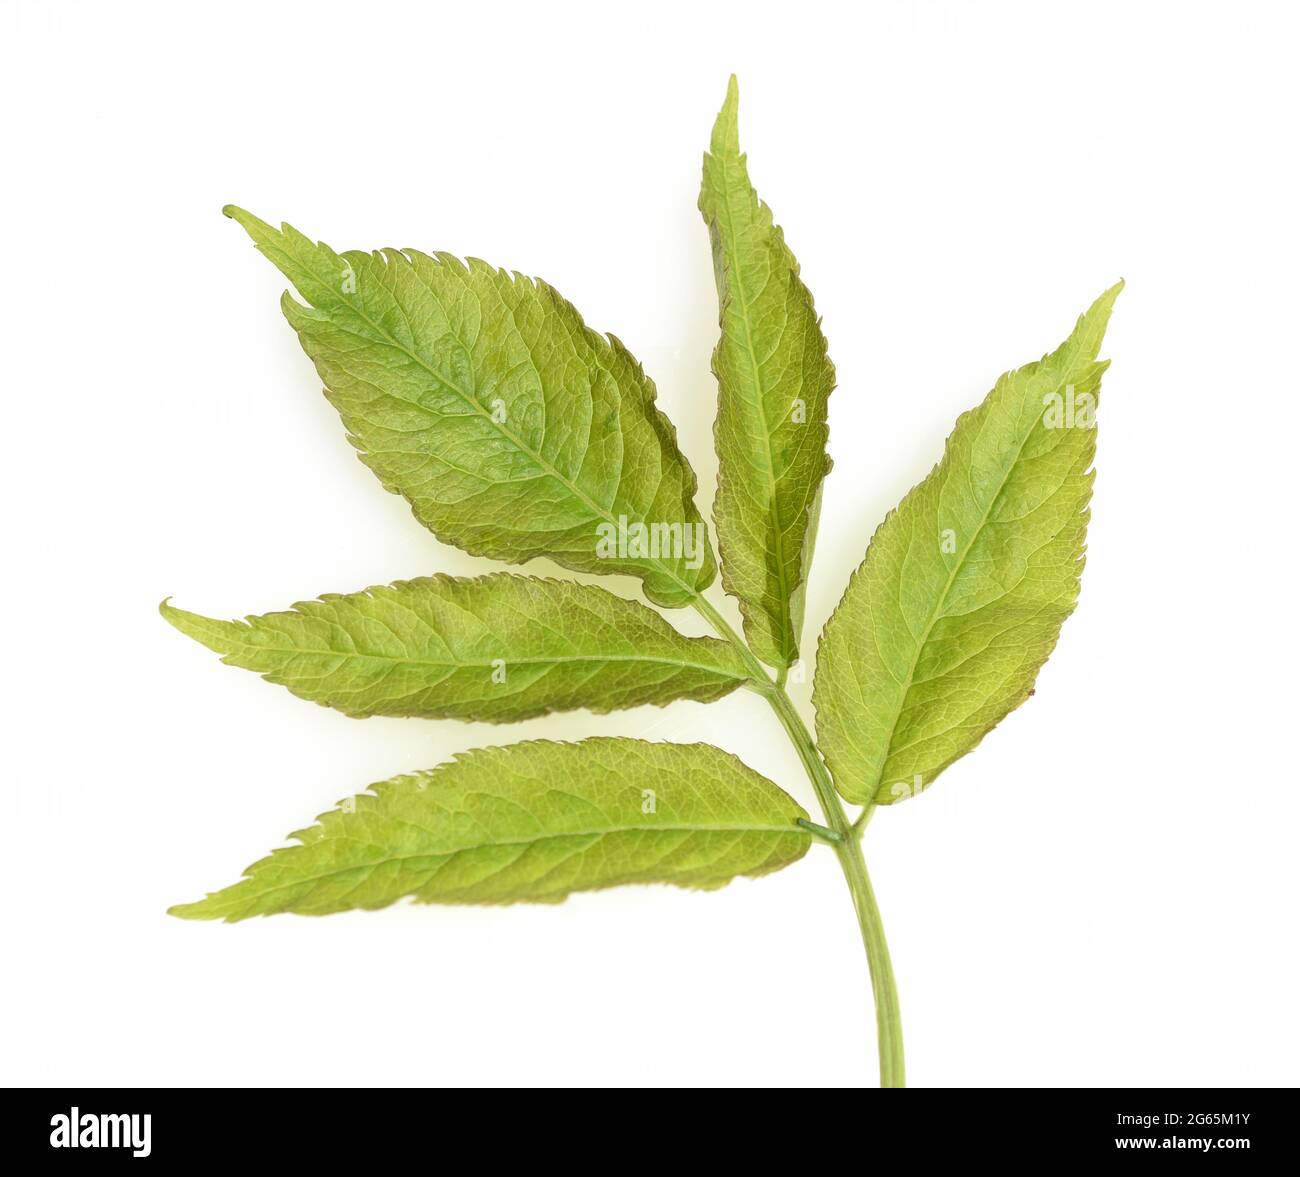 Holunderblatt, Sambucus nigra, ist eine heimische Buschart. Elderberry leaf, Sambucus nigra, is a native bush species. Stock Photo